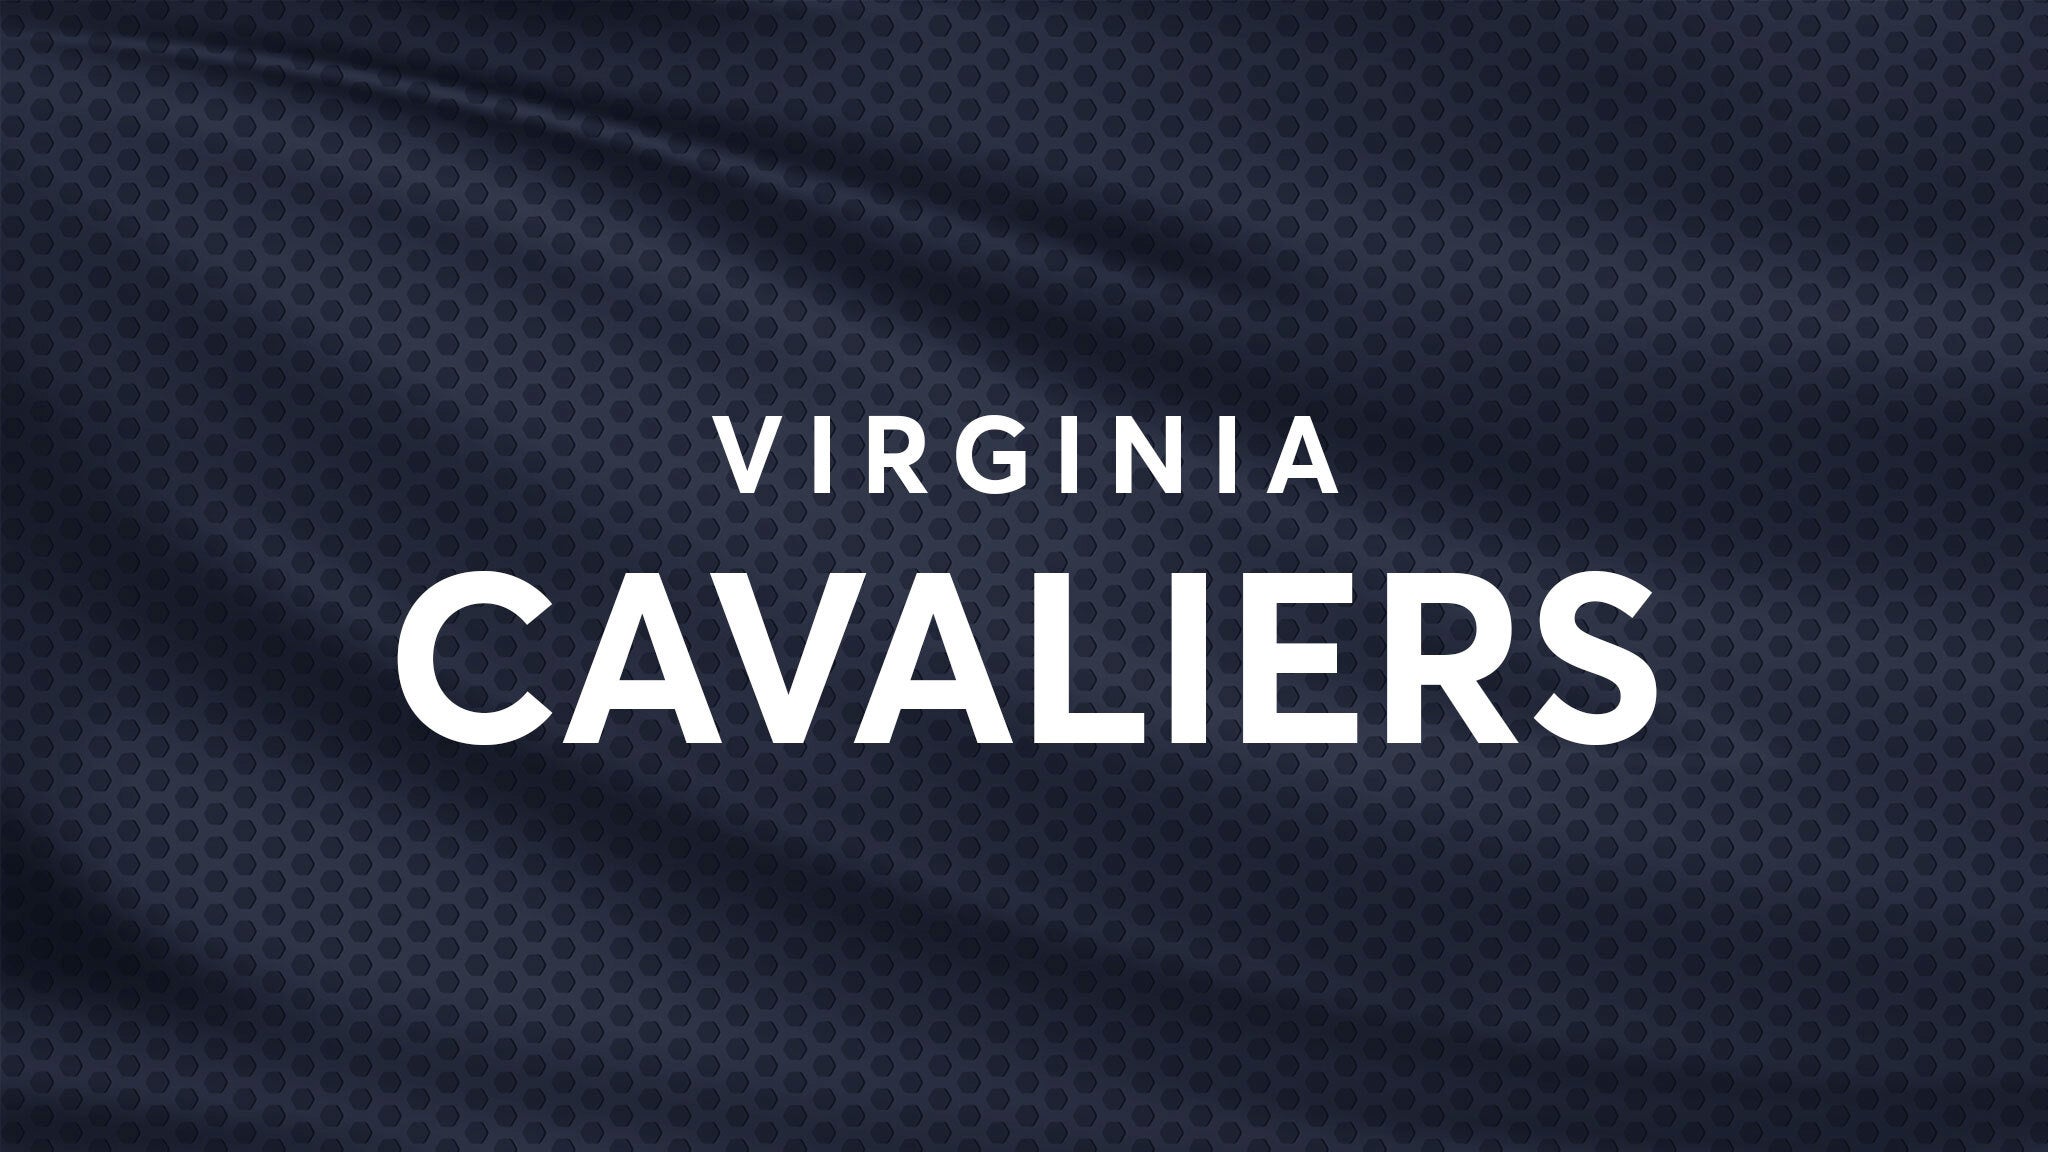 Virginia Cavaliers Football vs. Boston College Eagles Football hero